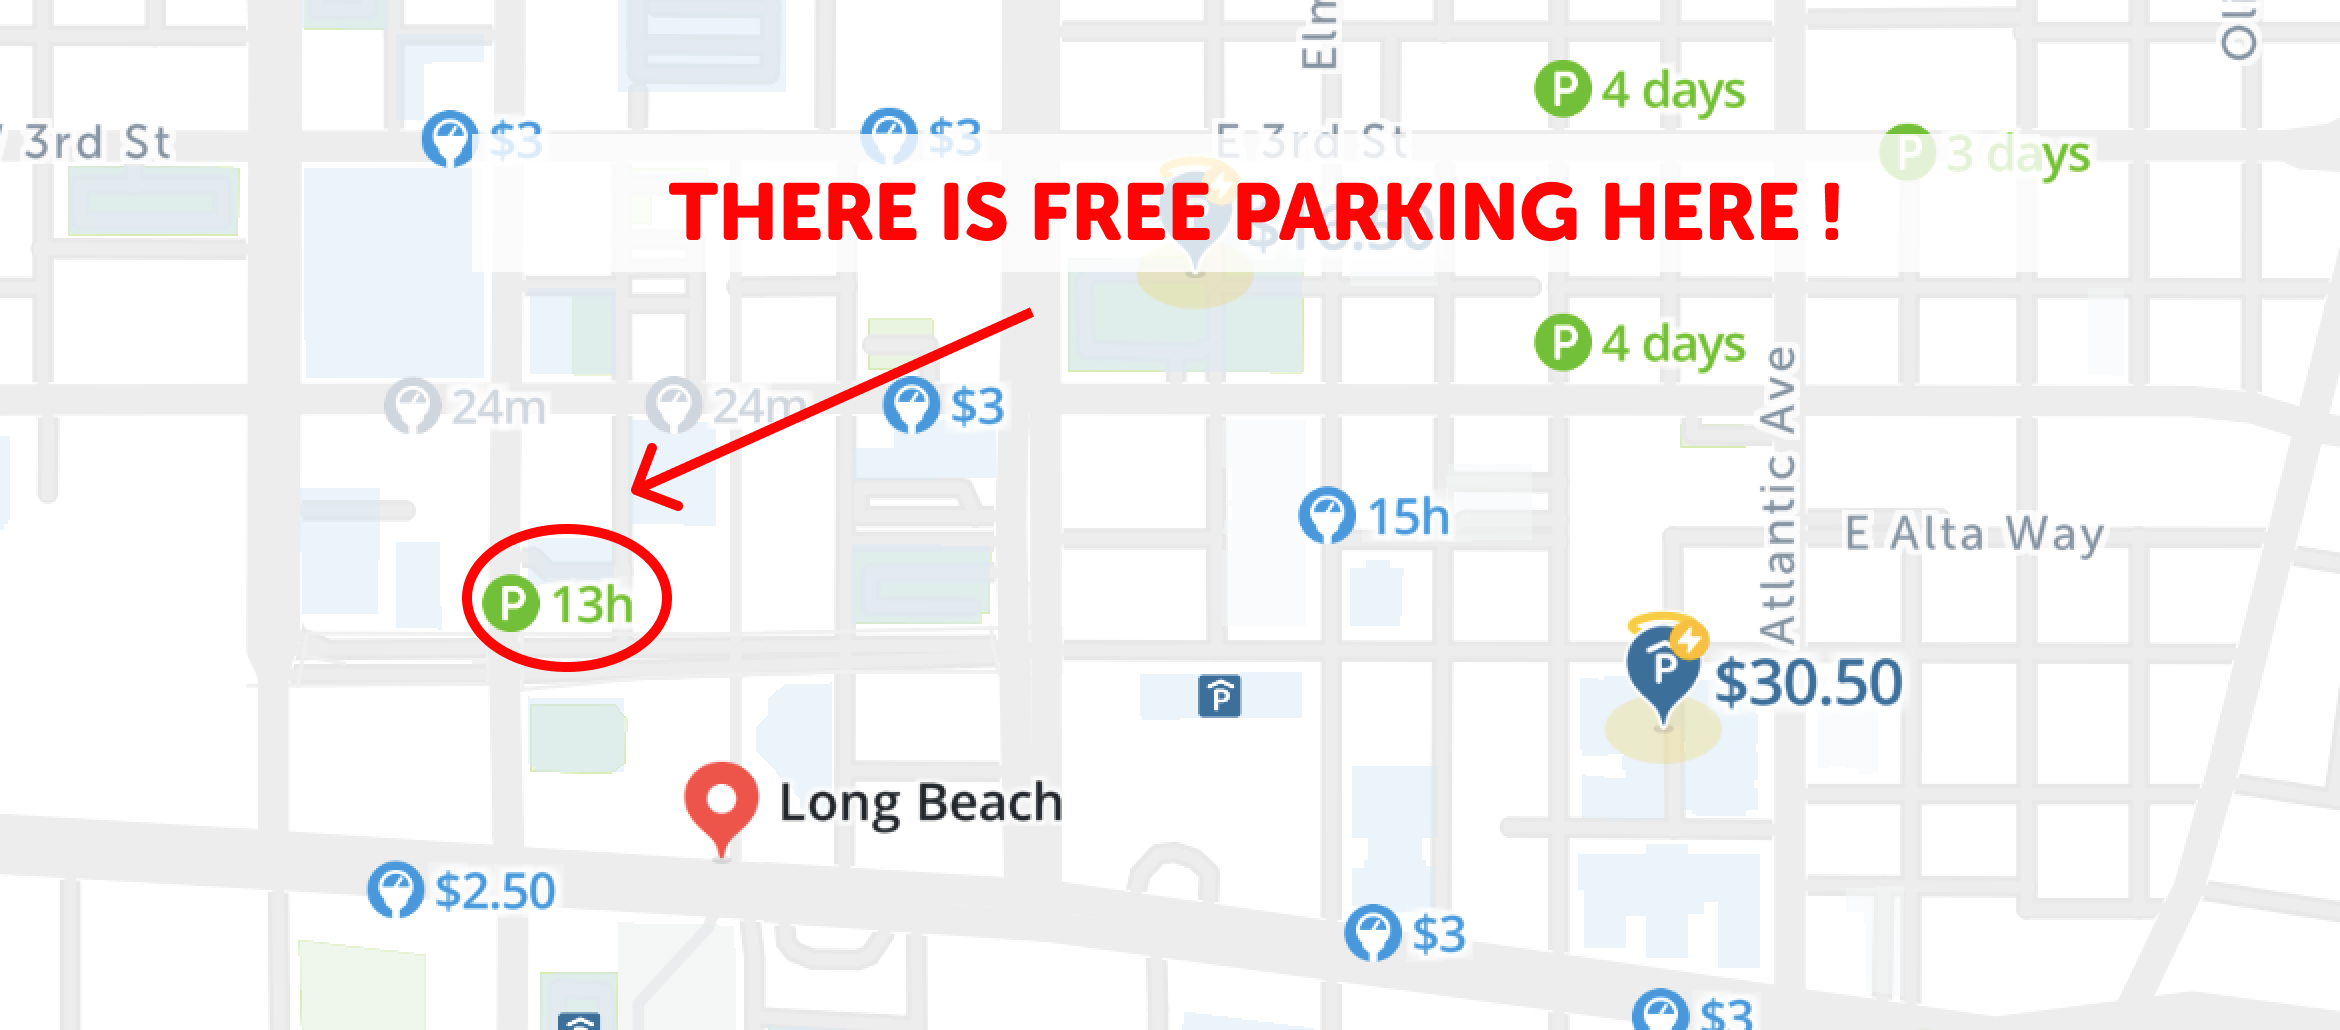 map of free parking in Long beach - SpotAngels